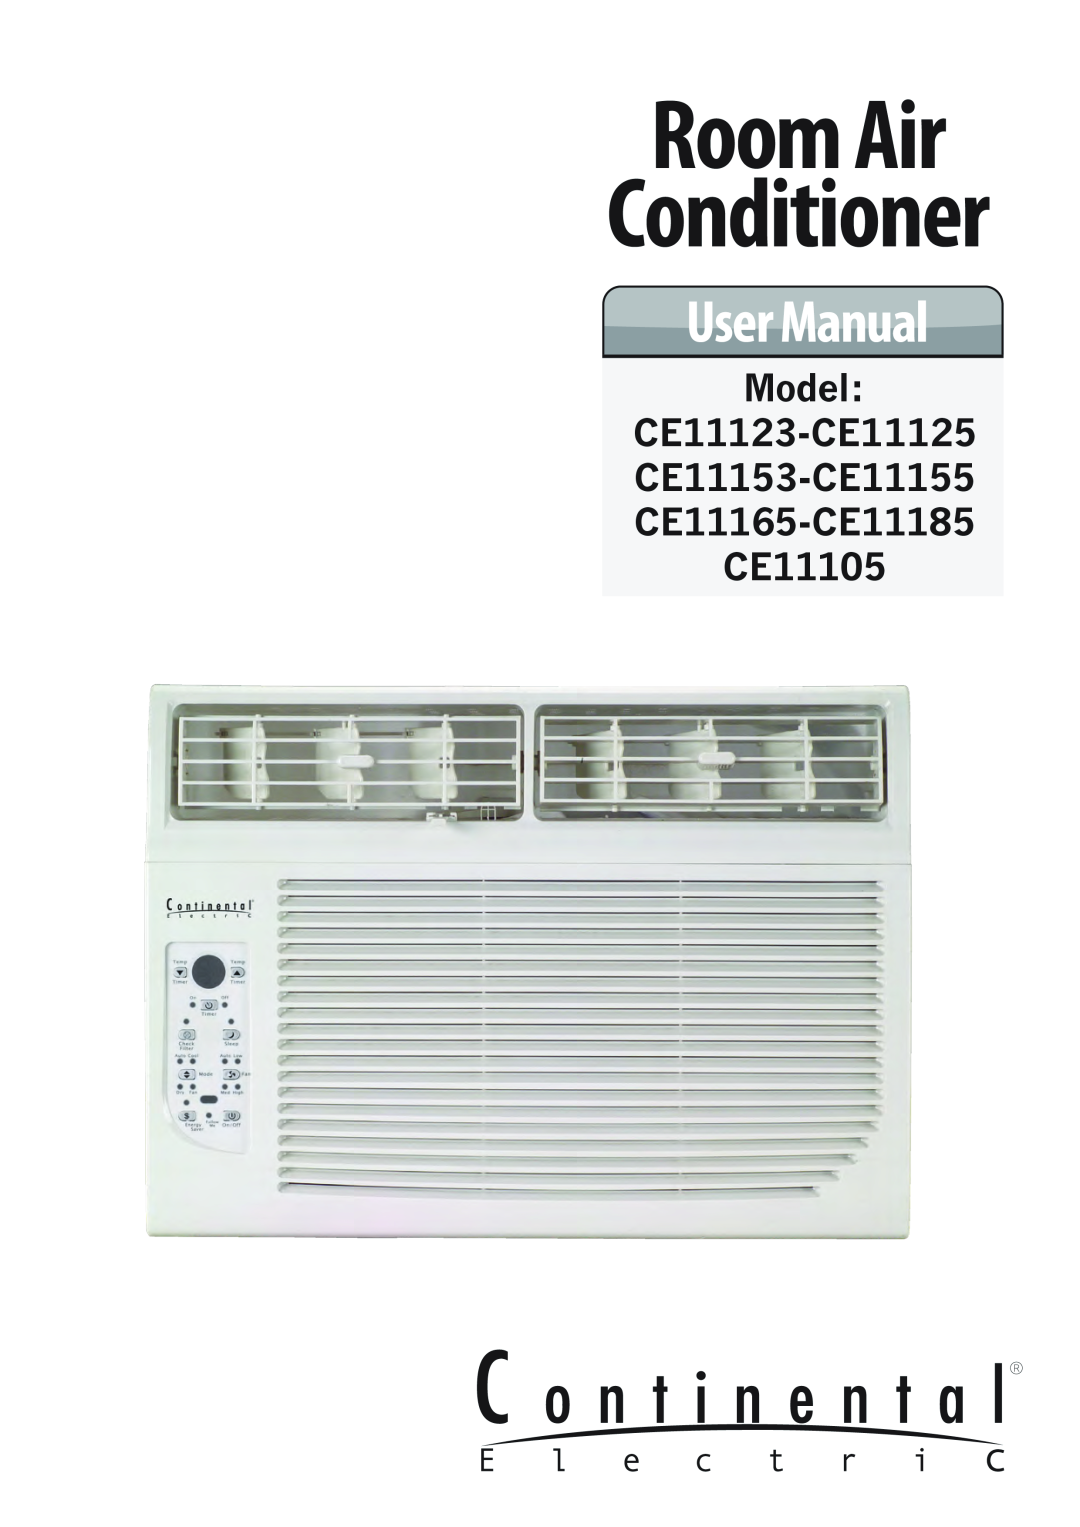 Continental Electric CE11125, CE11155, CE11153, CE11105, CE11185, CE11165 user manual User Manual, Room Air, Conditioner 